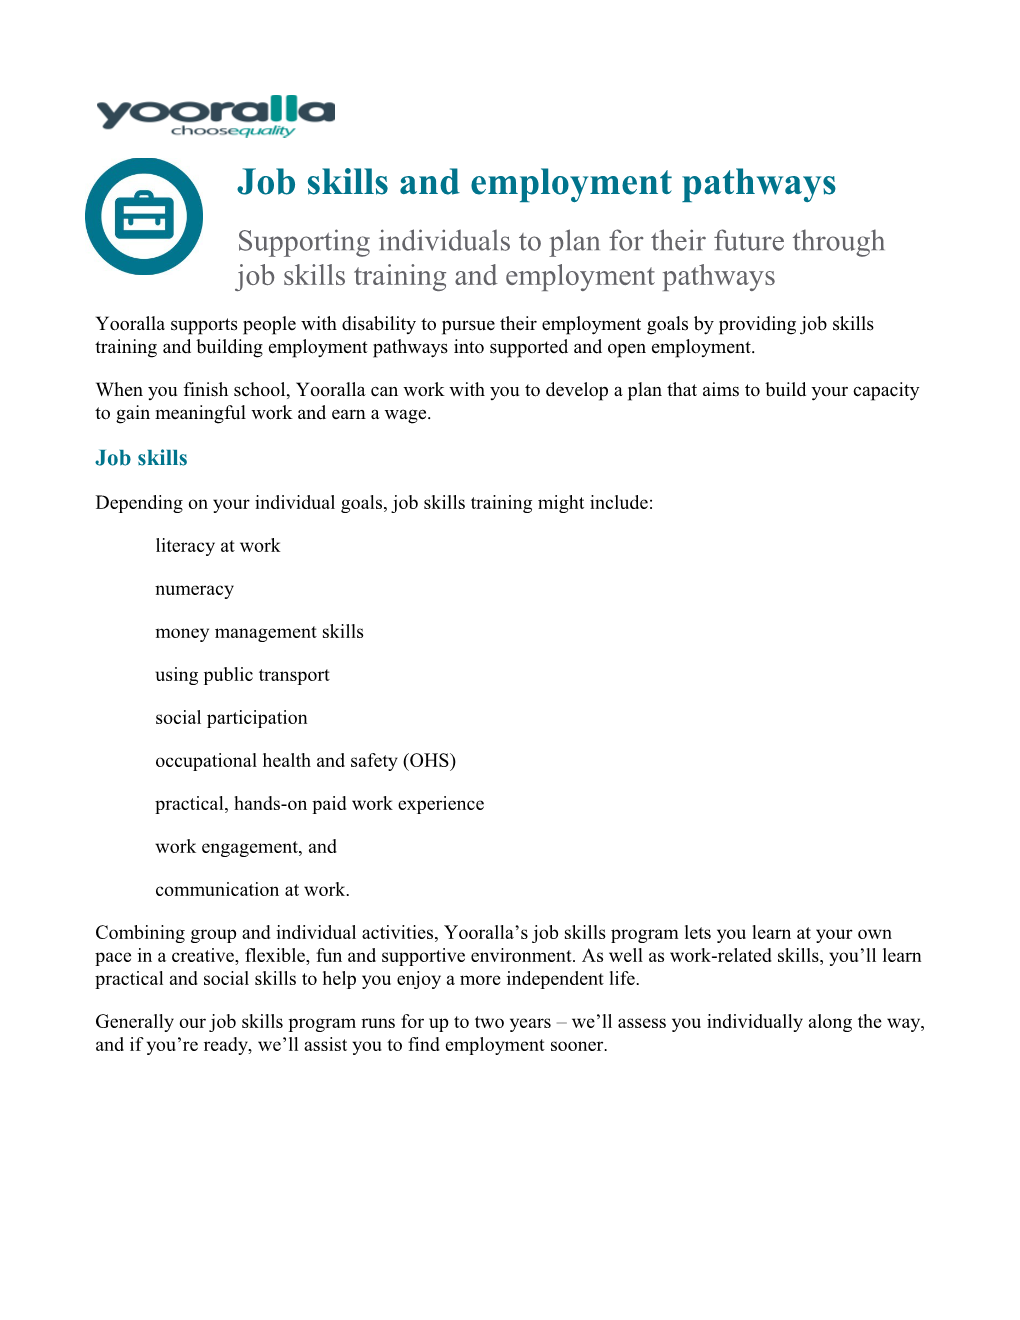 Job Skills and Employment Pathways